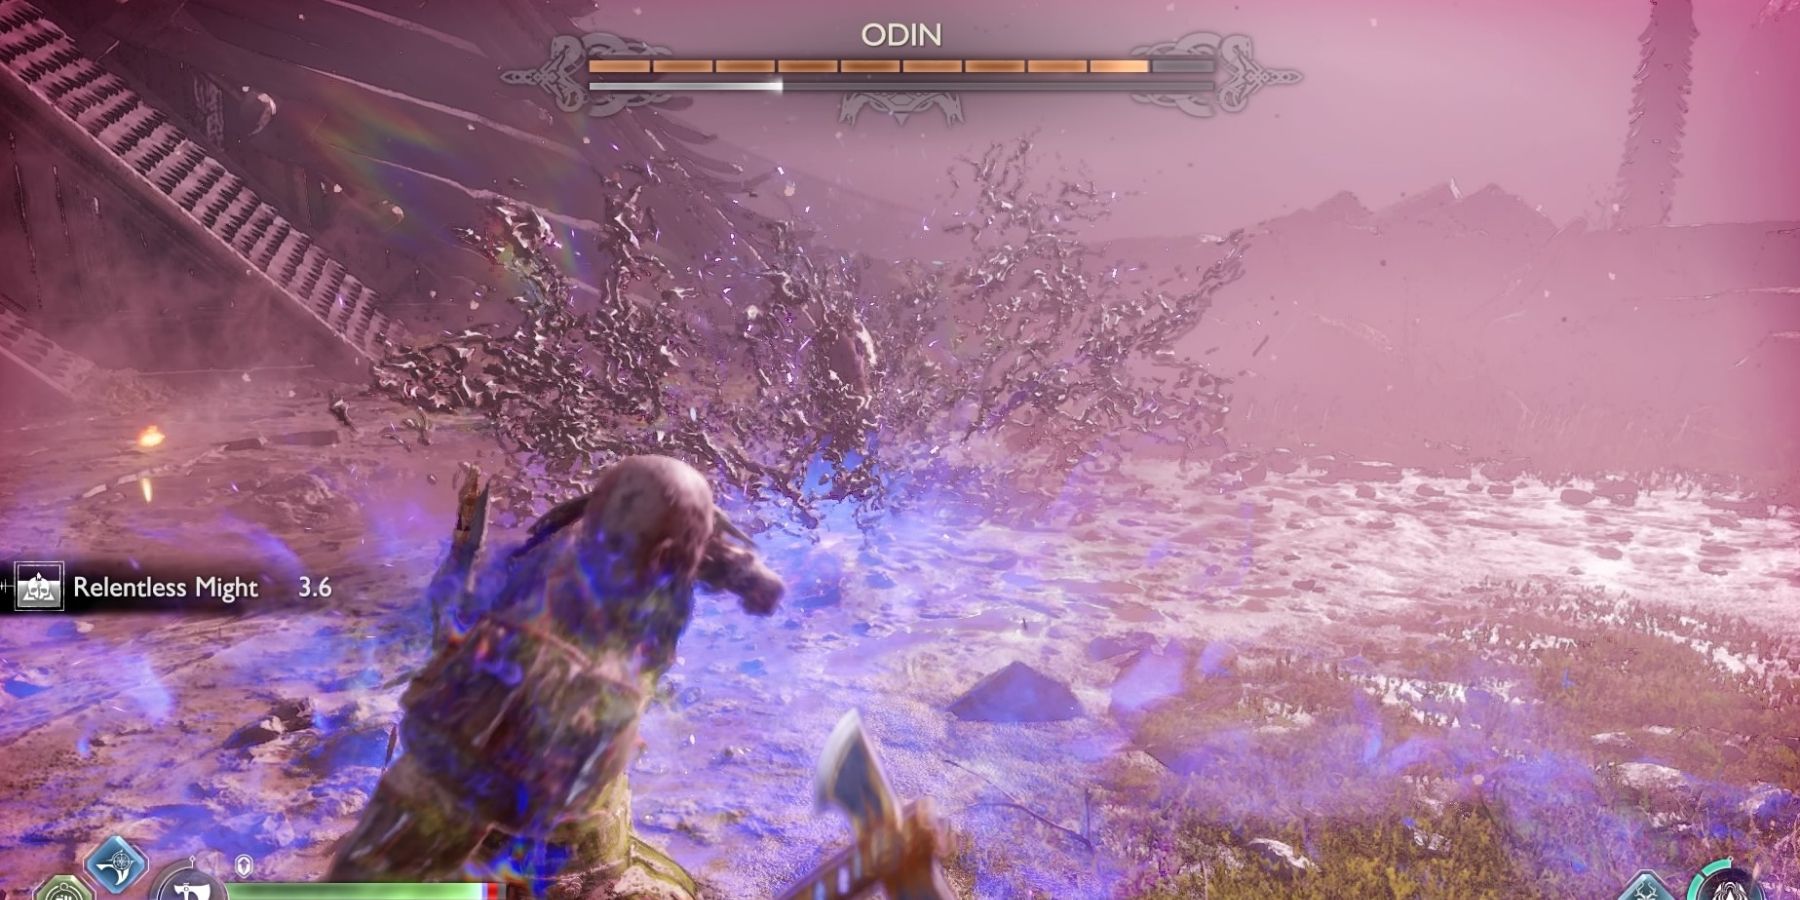 Kratos faces Odin in God of War Ragnarok